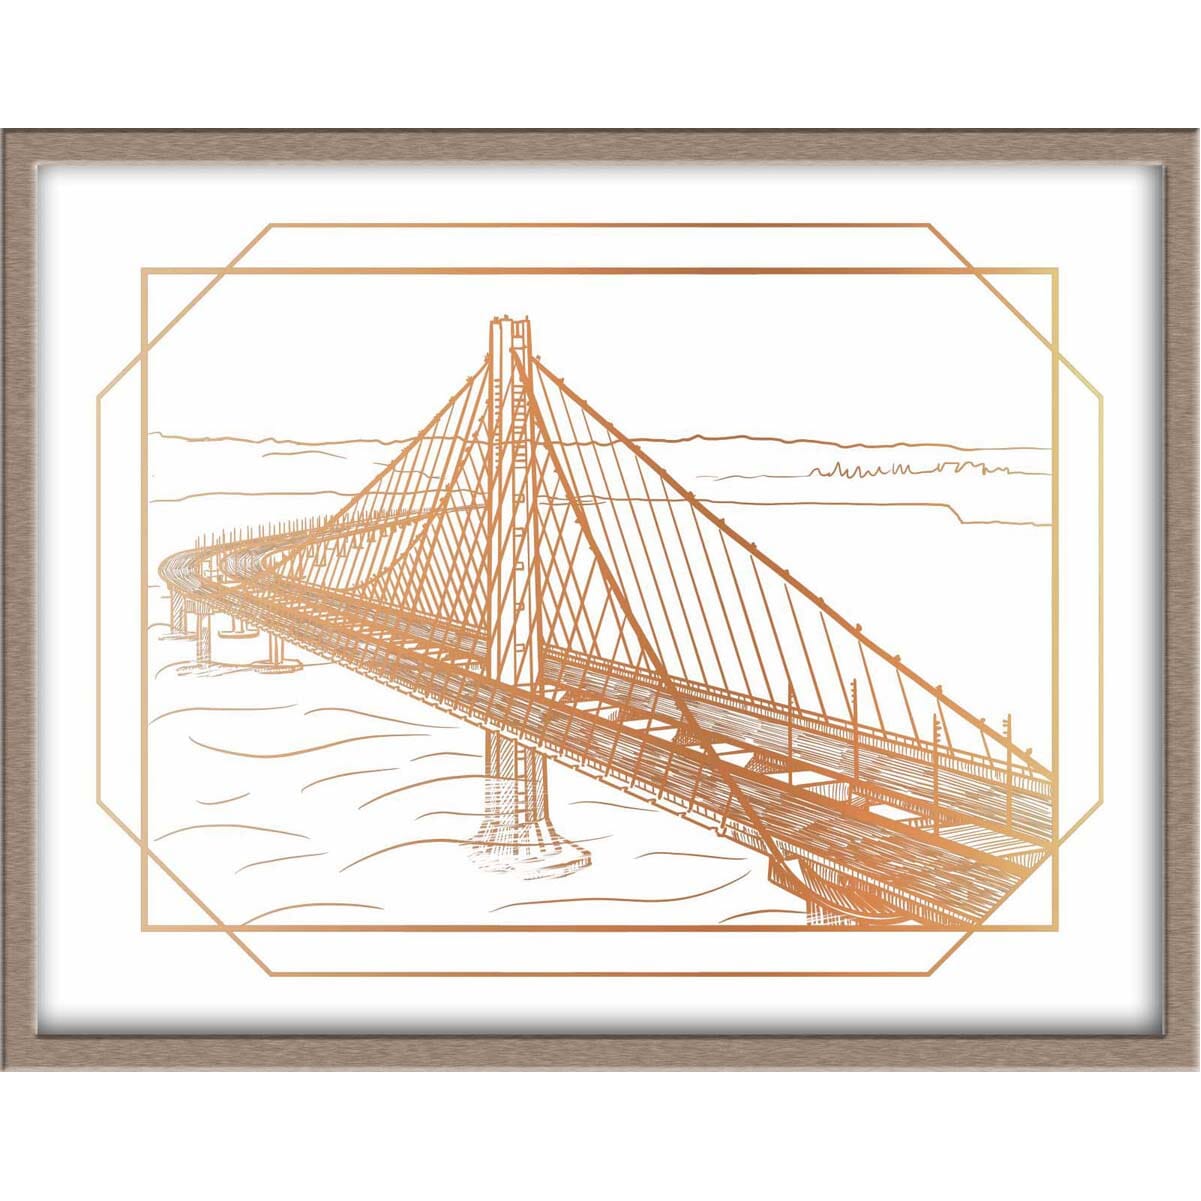 San Francisco's Bay Bridge Landmark Foiled Print Posters, Prints, & Visual Artwork JoyousJoyfulJoyness 